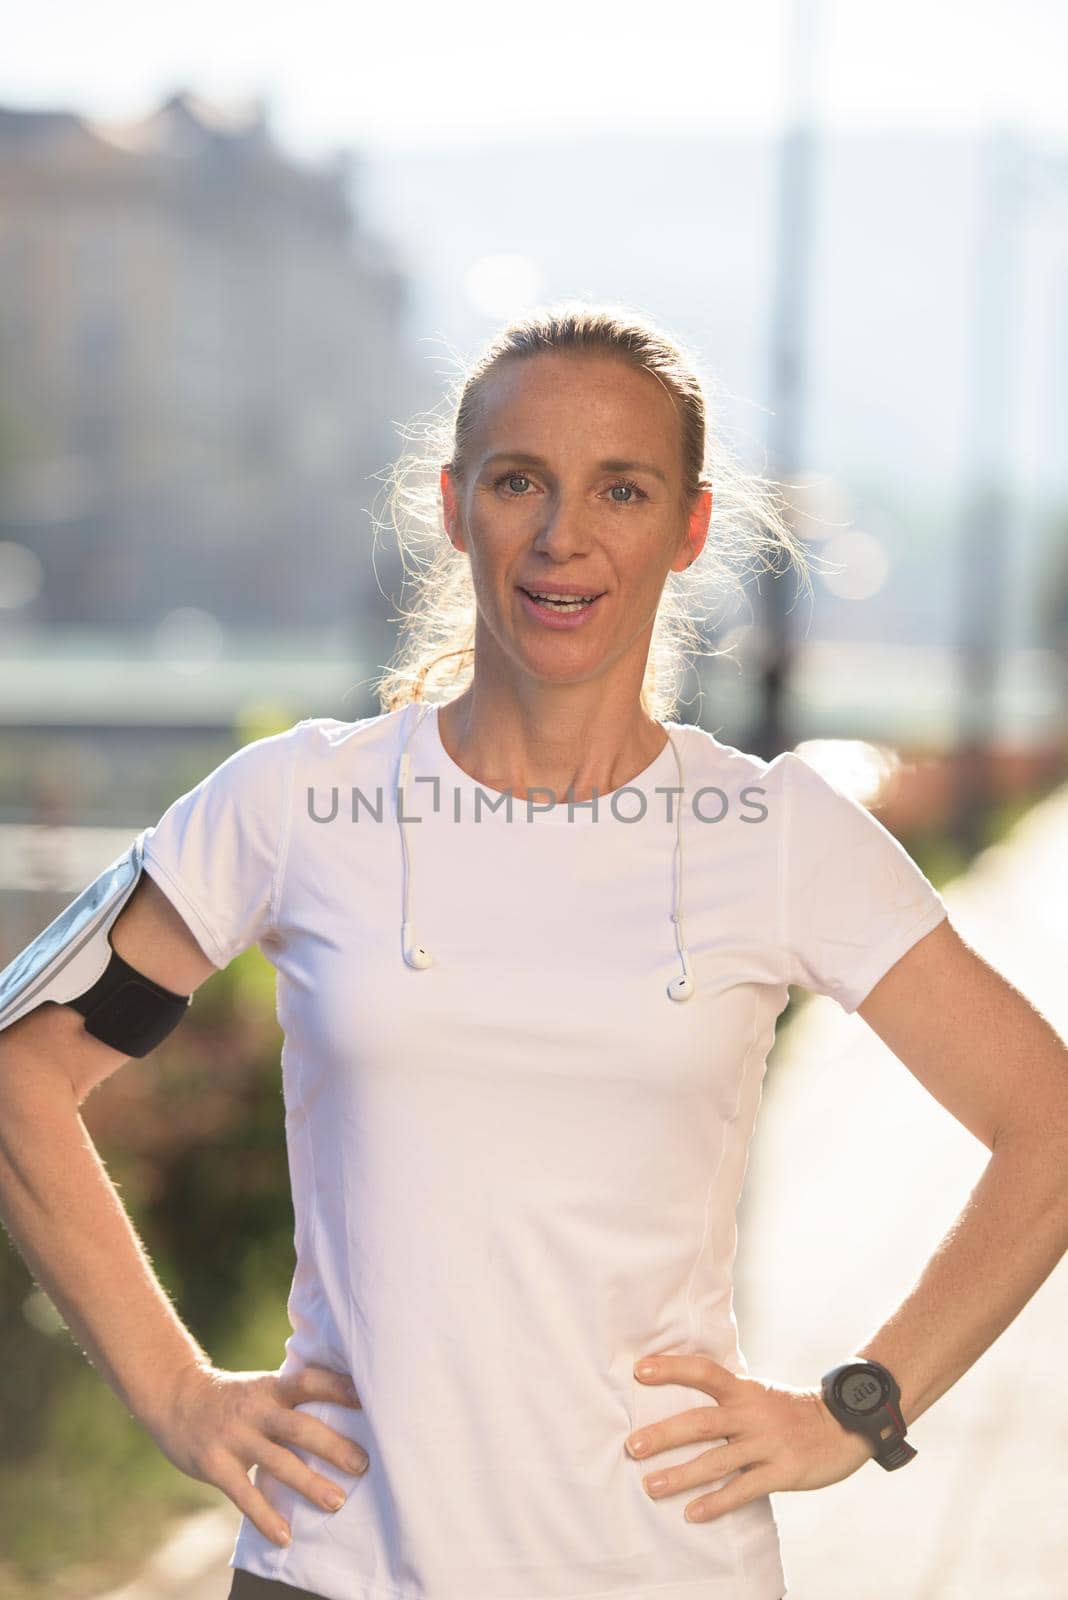 jogging woman portrait by dotshock